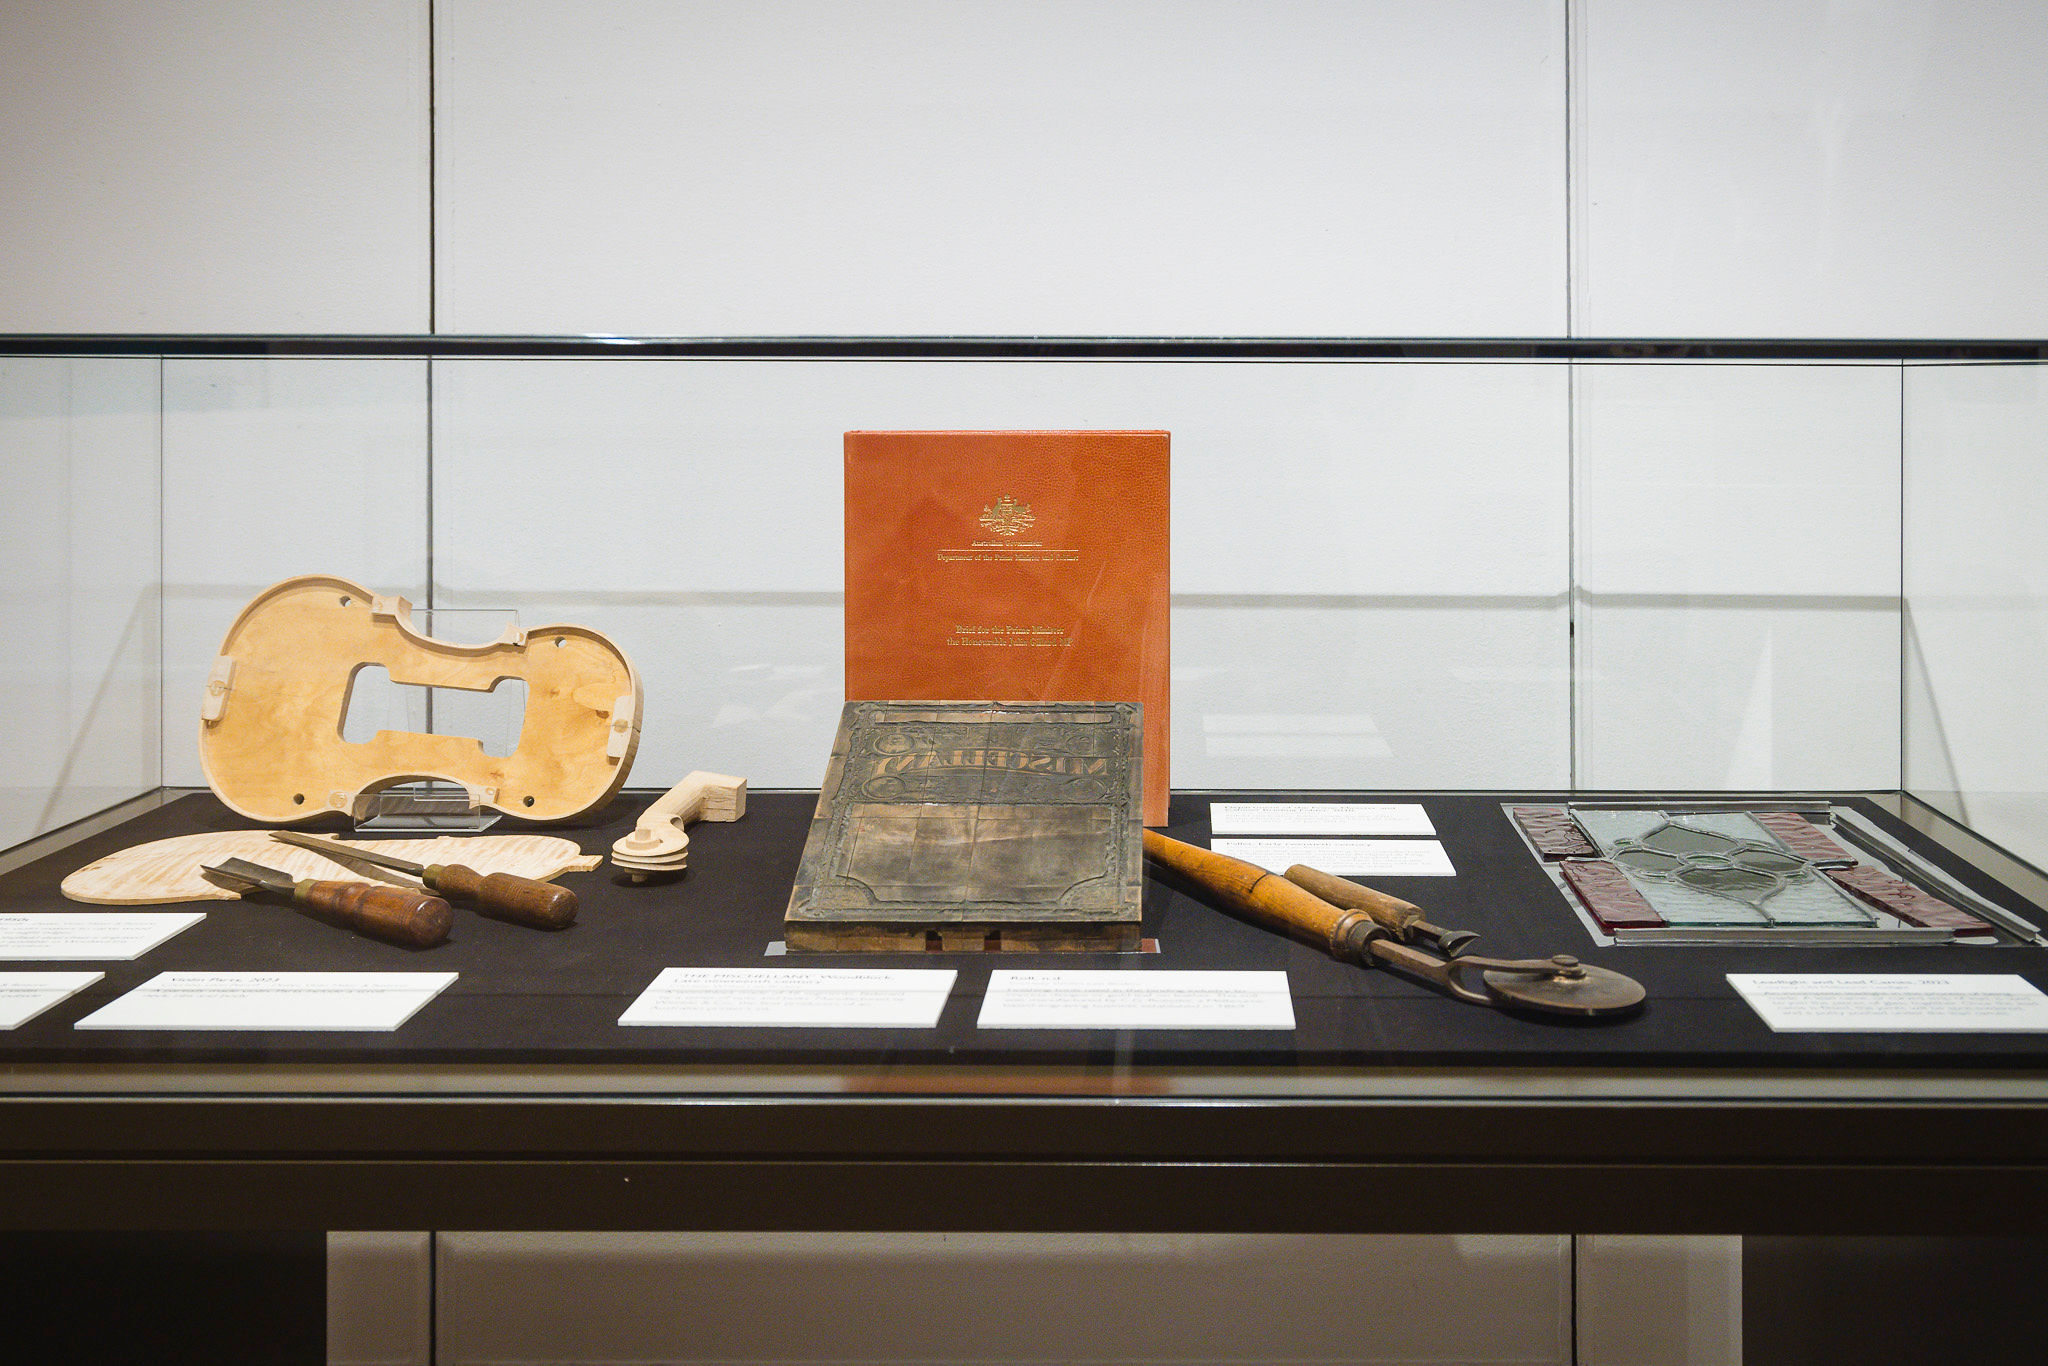 Violin crafting tools on display